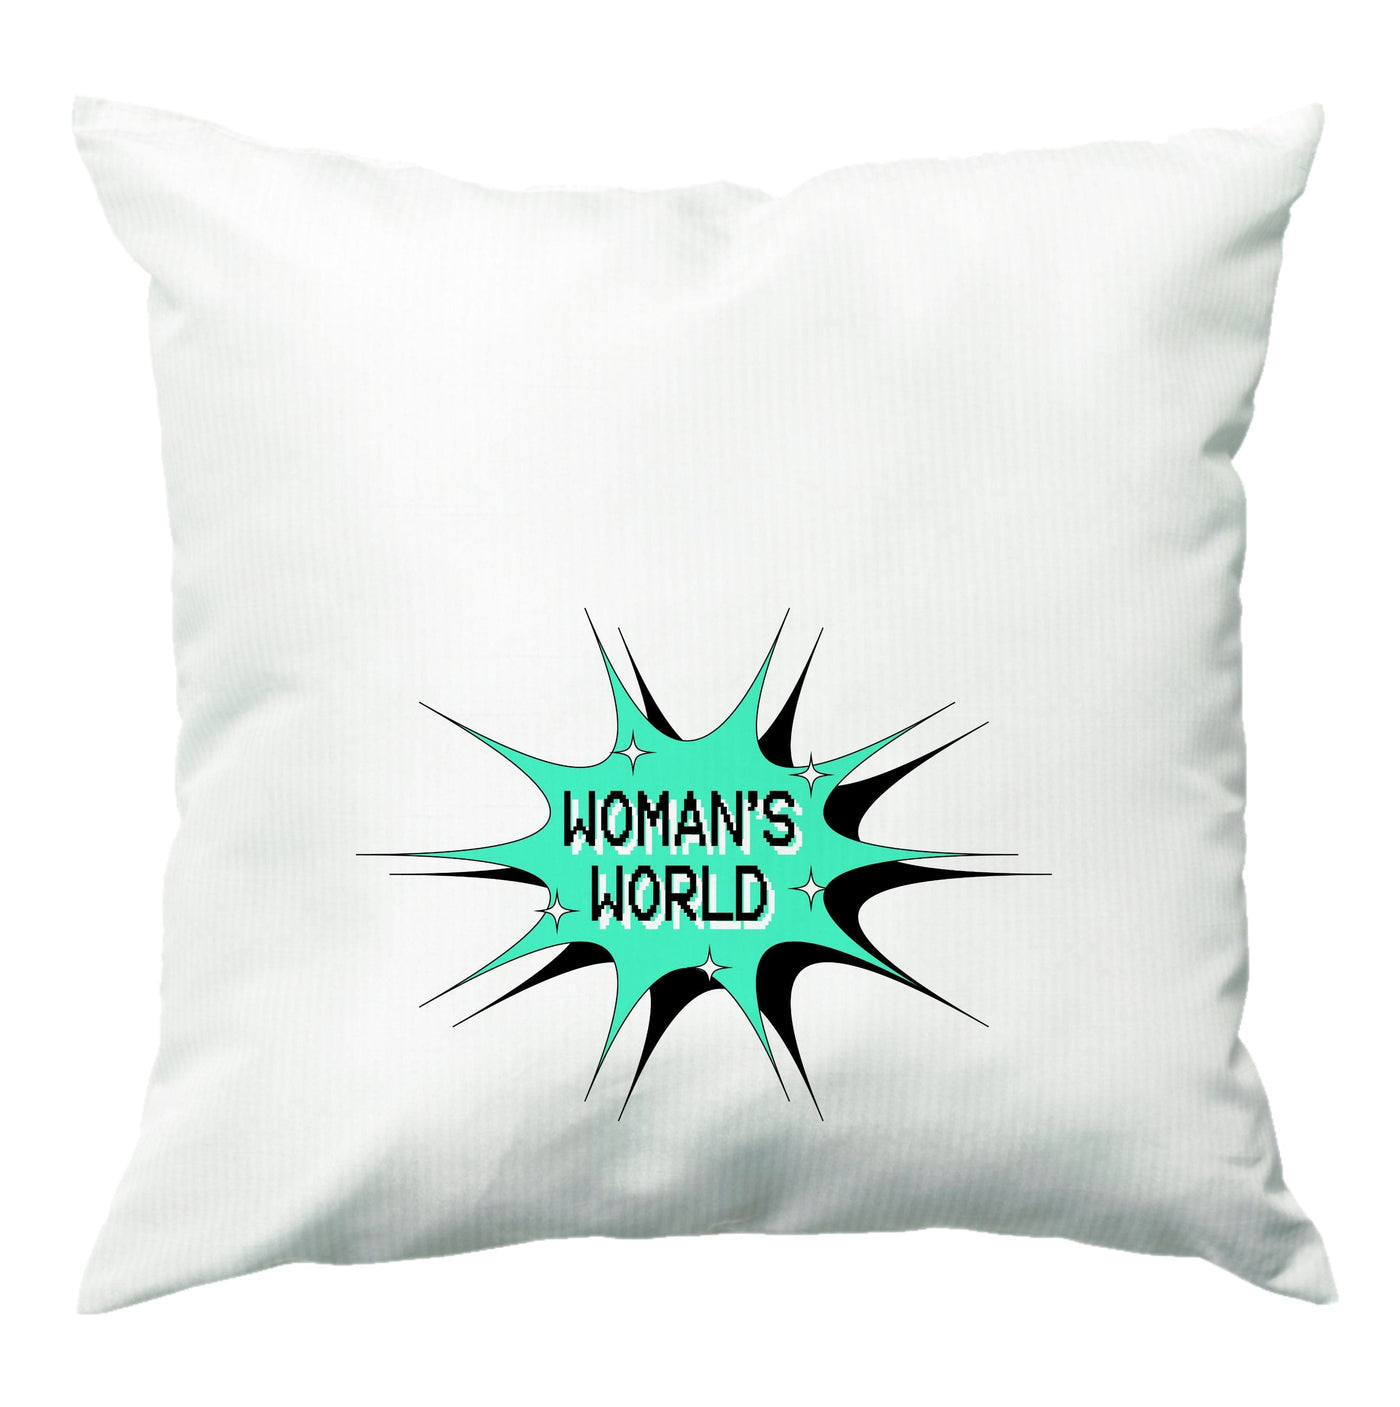 Woman's World - Katy Perry Cushion